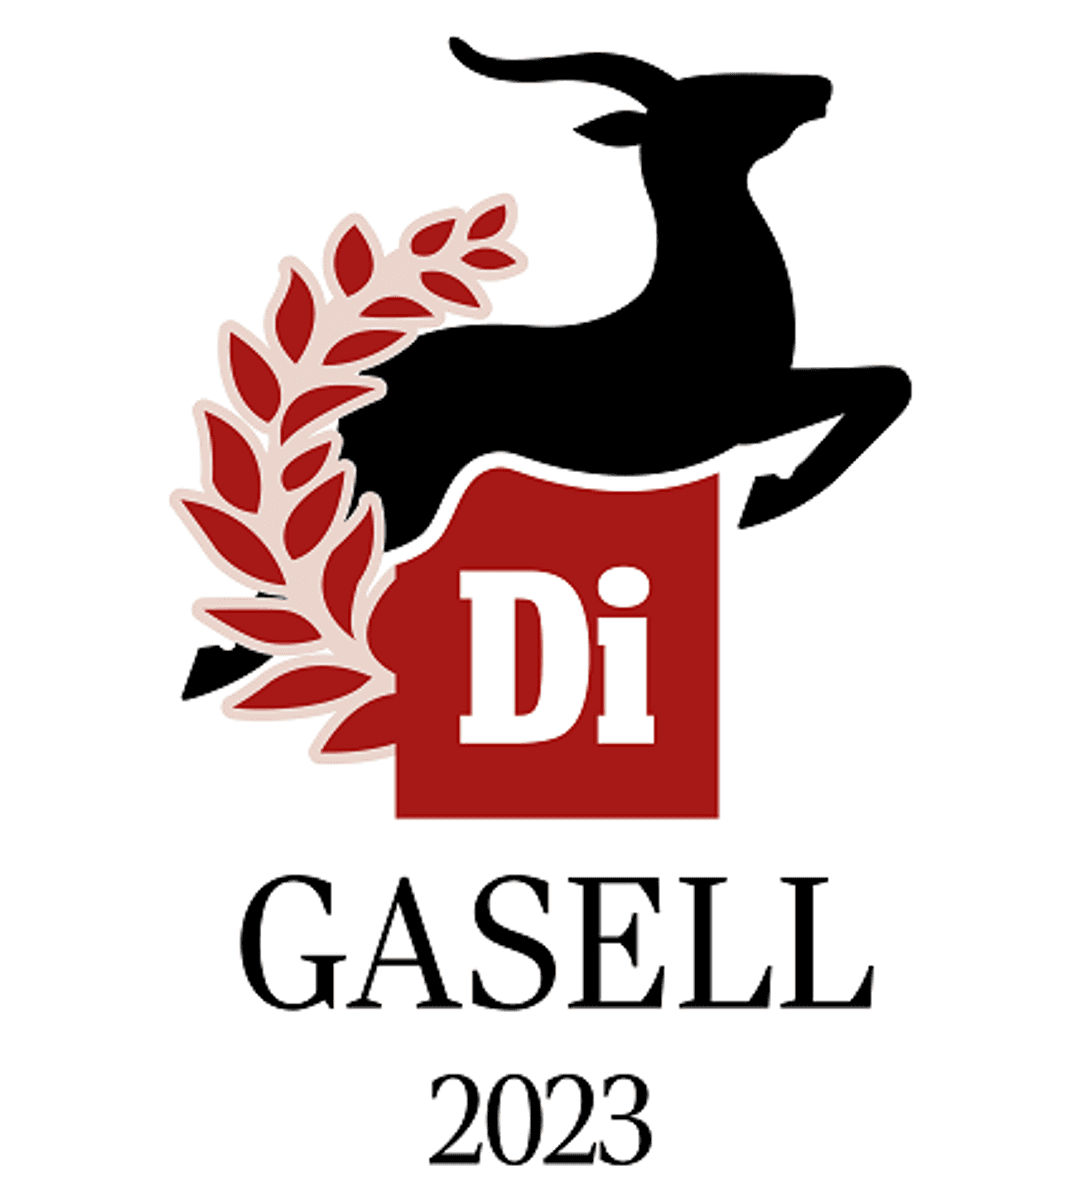 Dagens Industri Gasell 2023